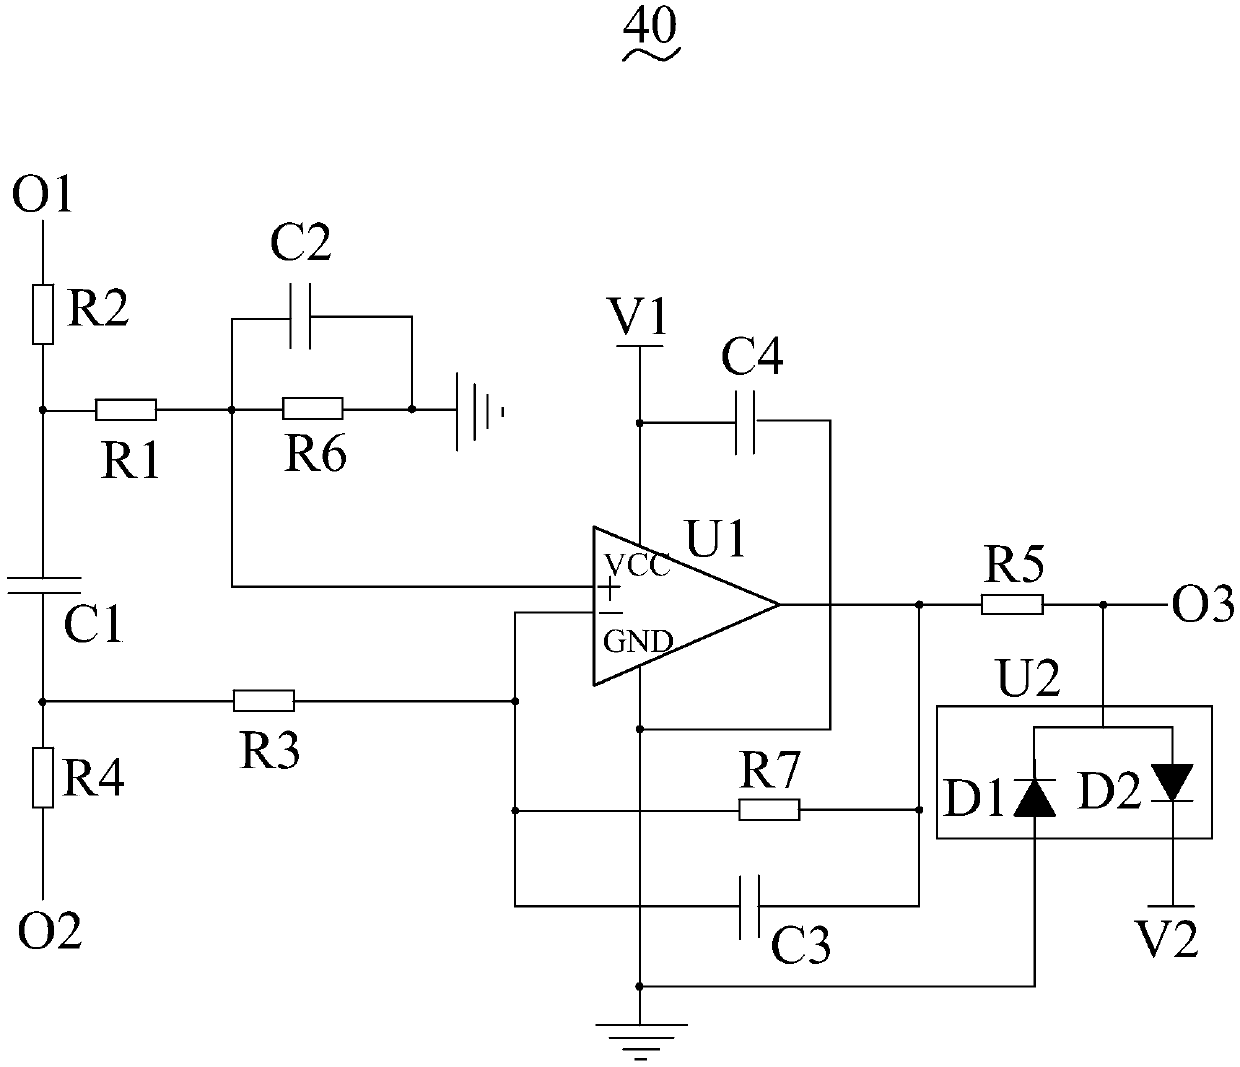 Battery charging control circuit